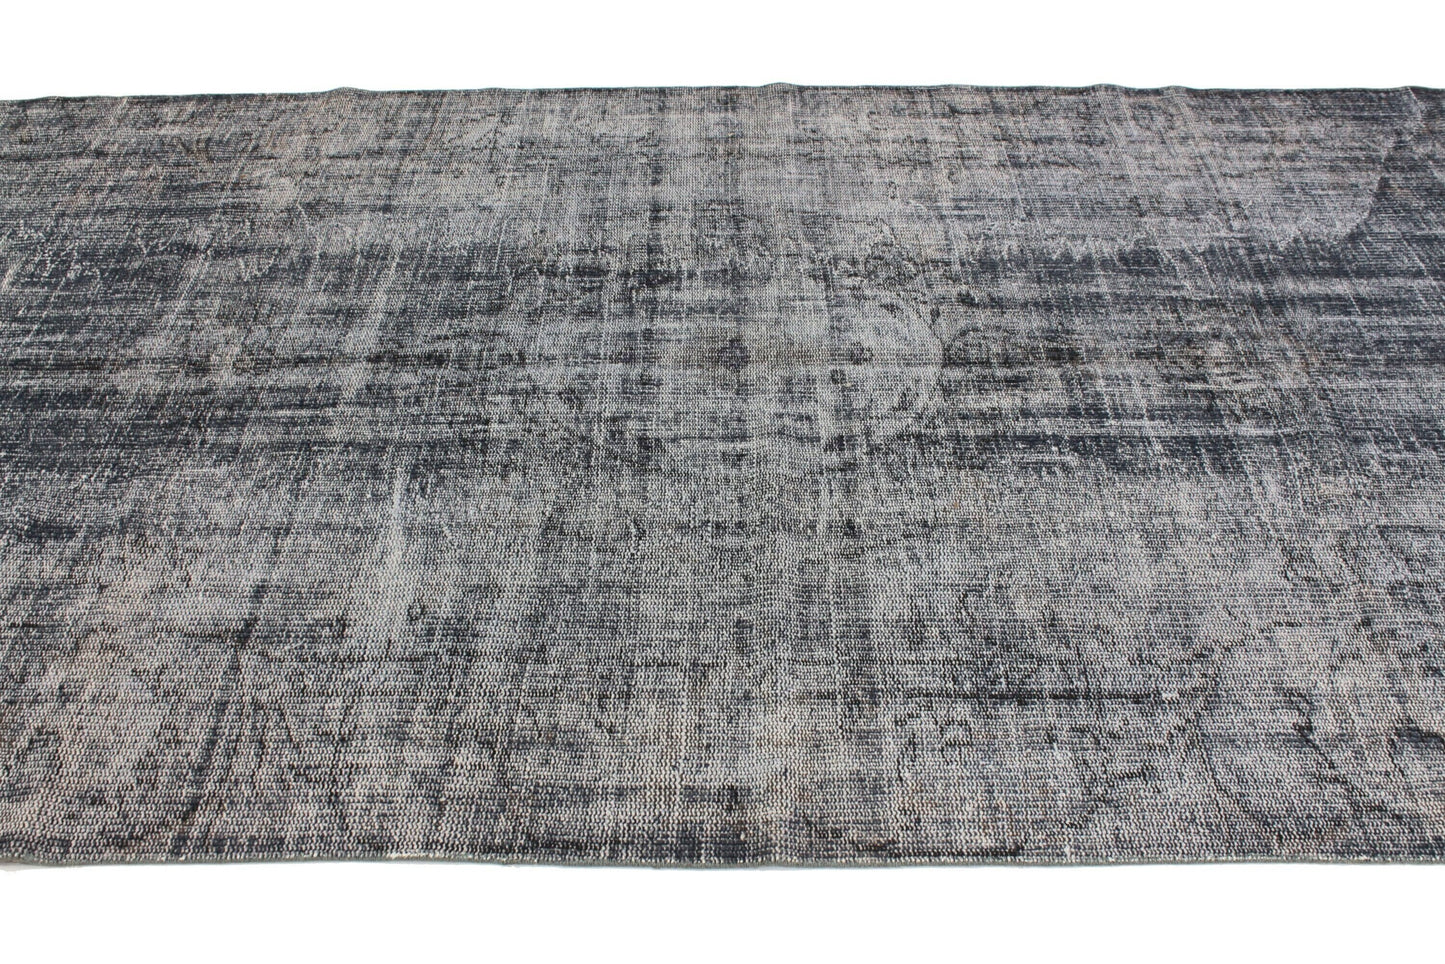 Black Worn Turkish Rug, Vintage Rug 5x8, Distressed Rug, Area Carpet Rug, Handmade, Home Decor,Wool Rug Made in Turkey, 3332